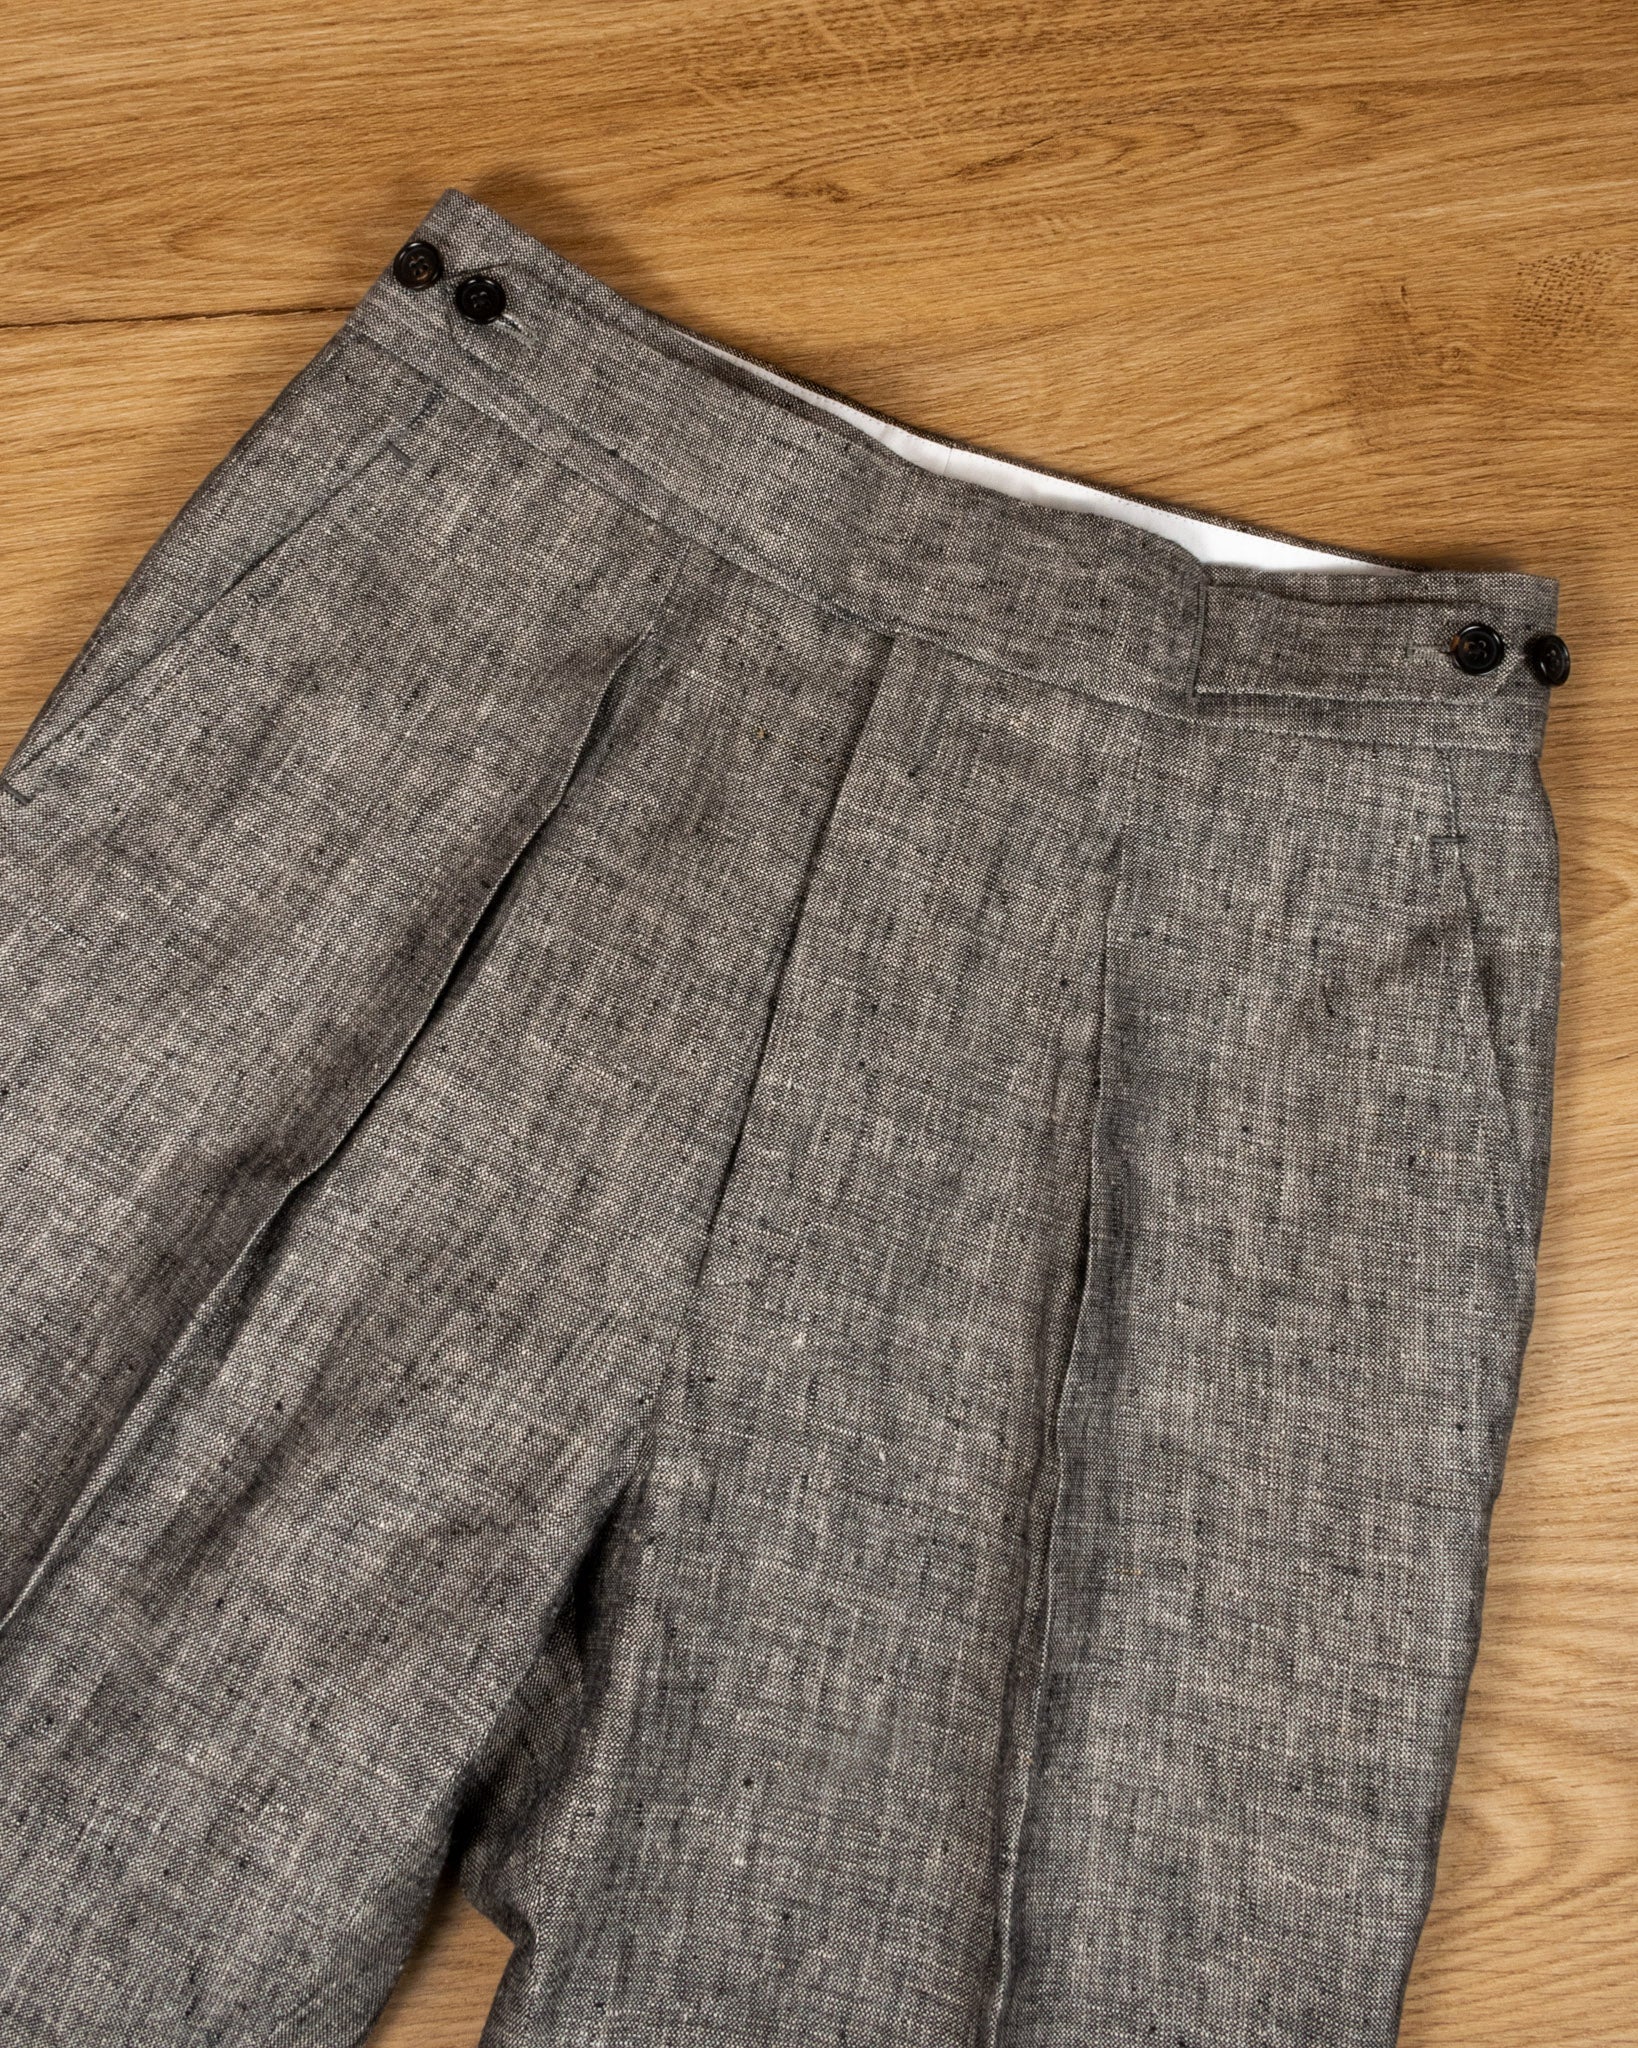 Slim Fit Navy Semi Plain Trousers | Buy Online at Moss